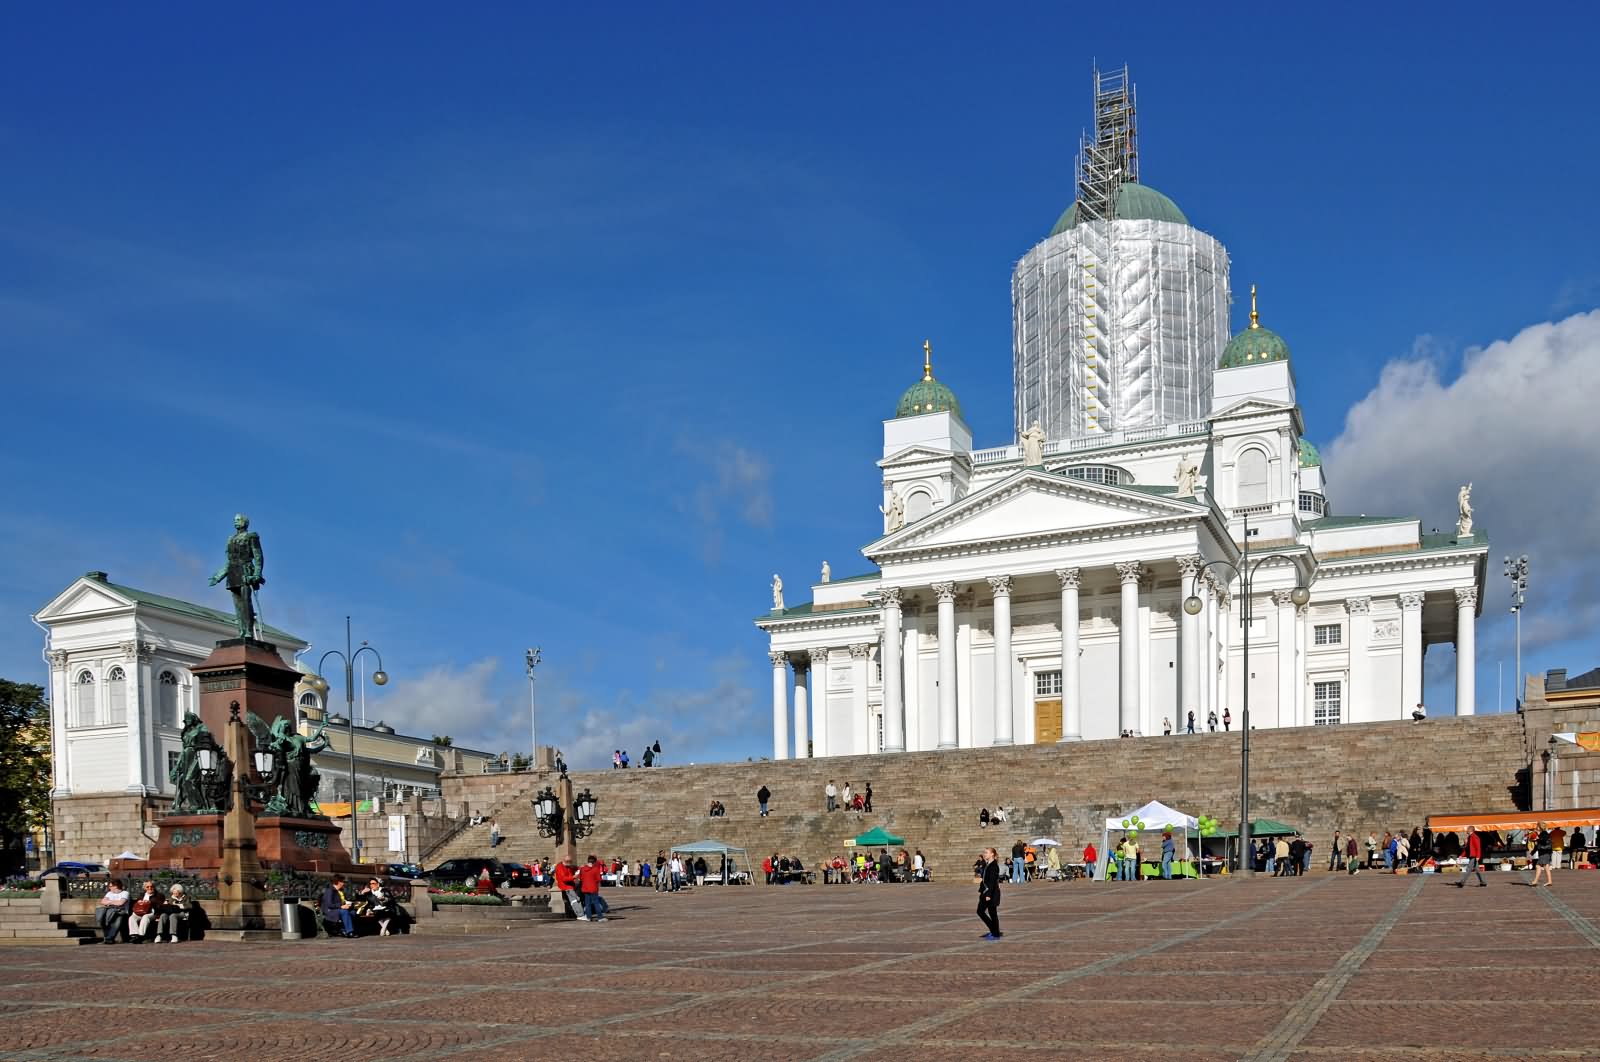 The Helsinki Cathedral Under Renovation